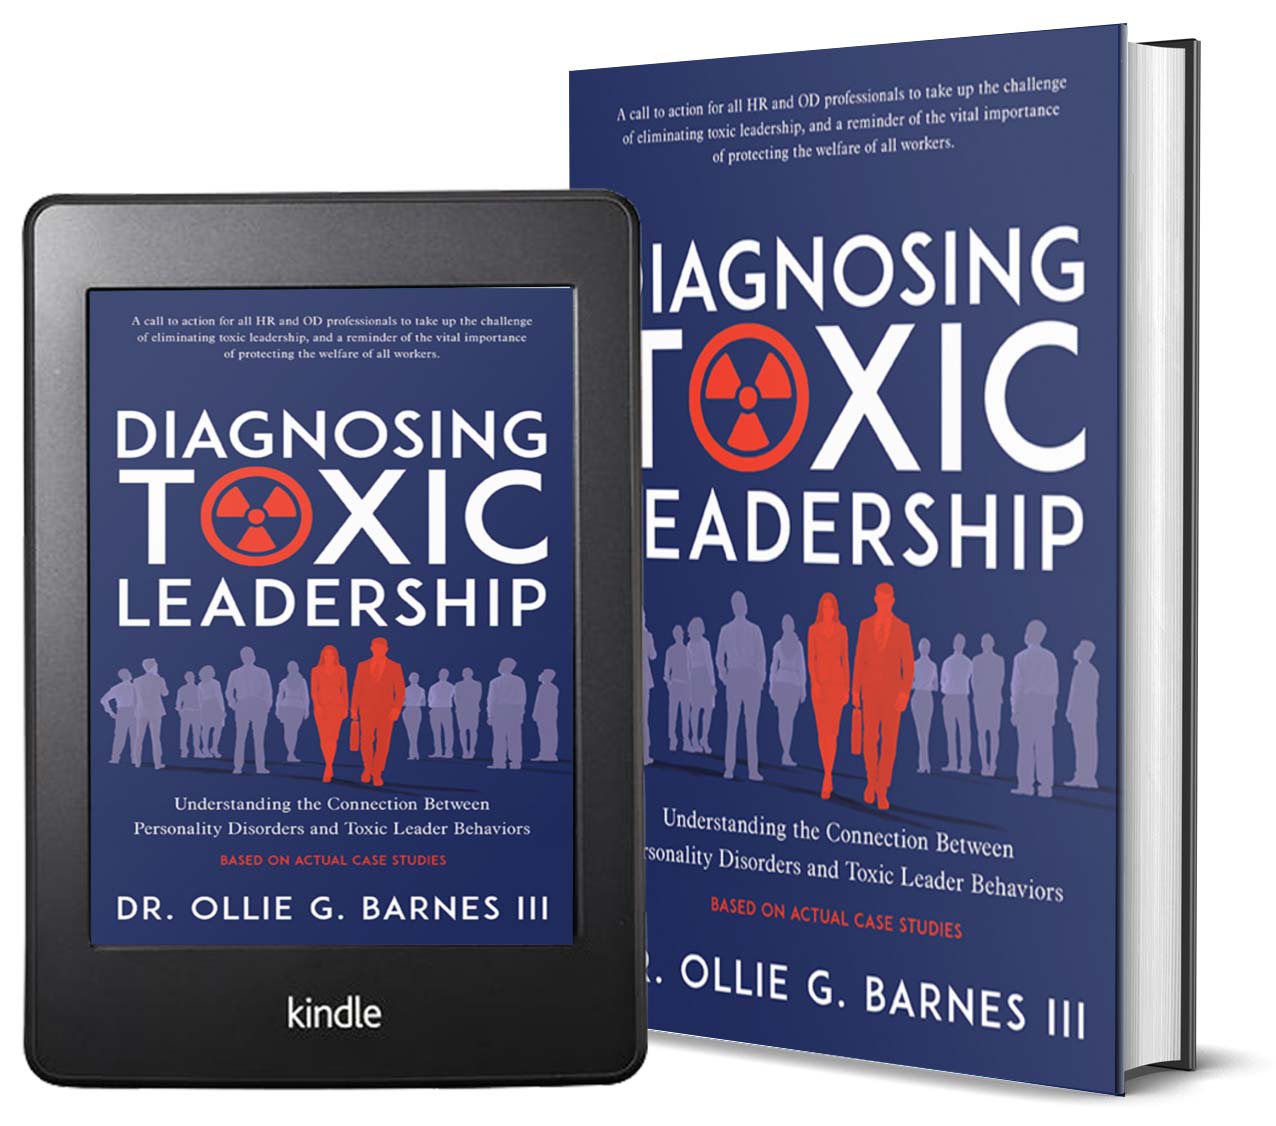 diagnosing toxic leadership book and kindle